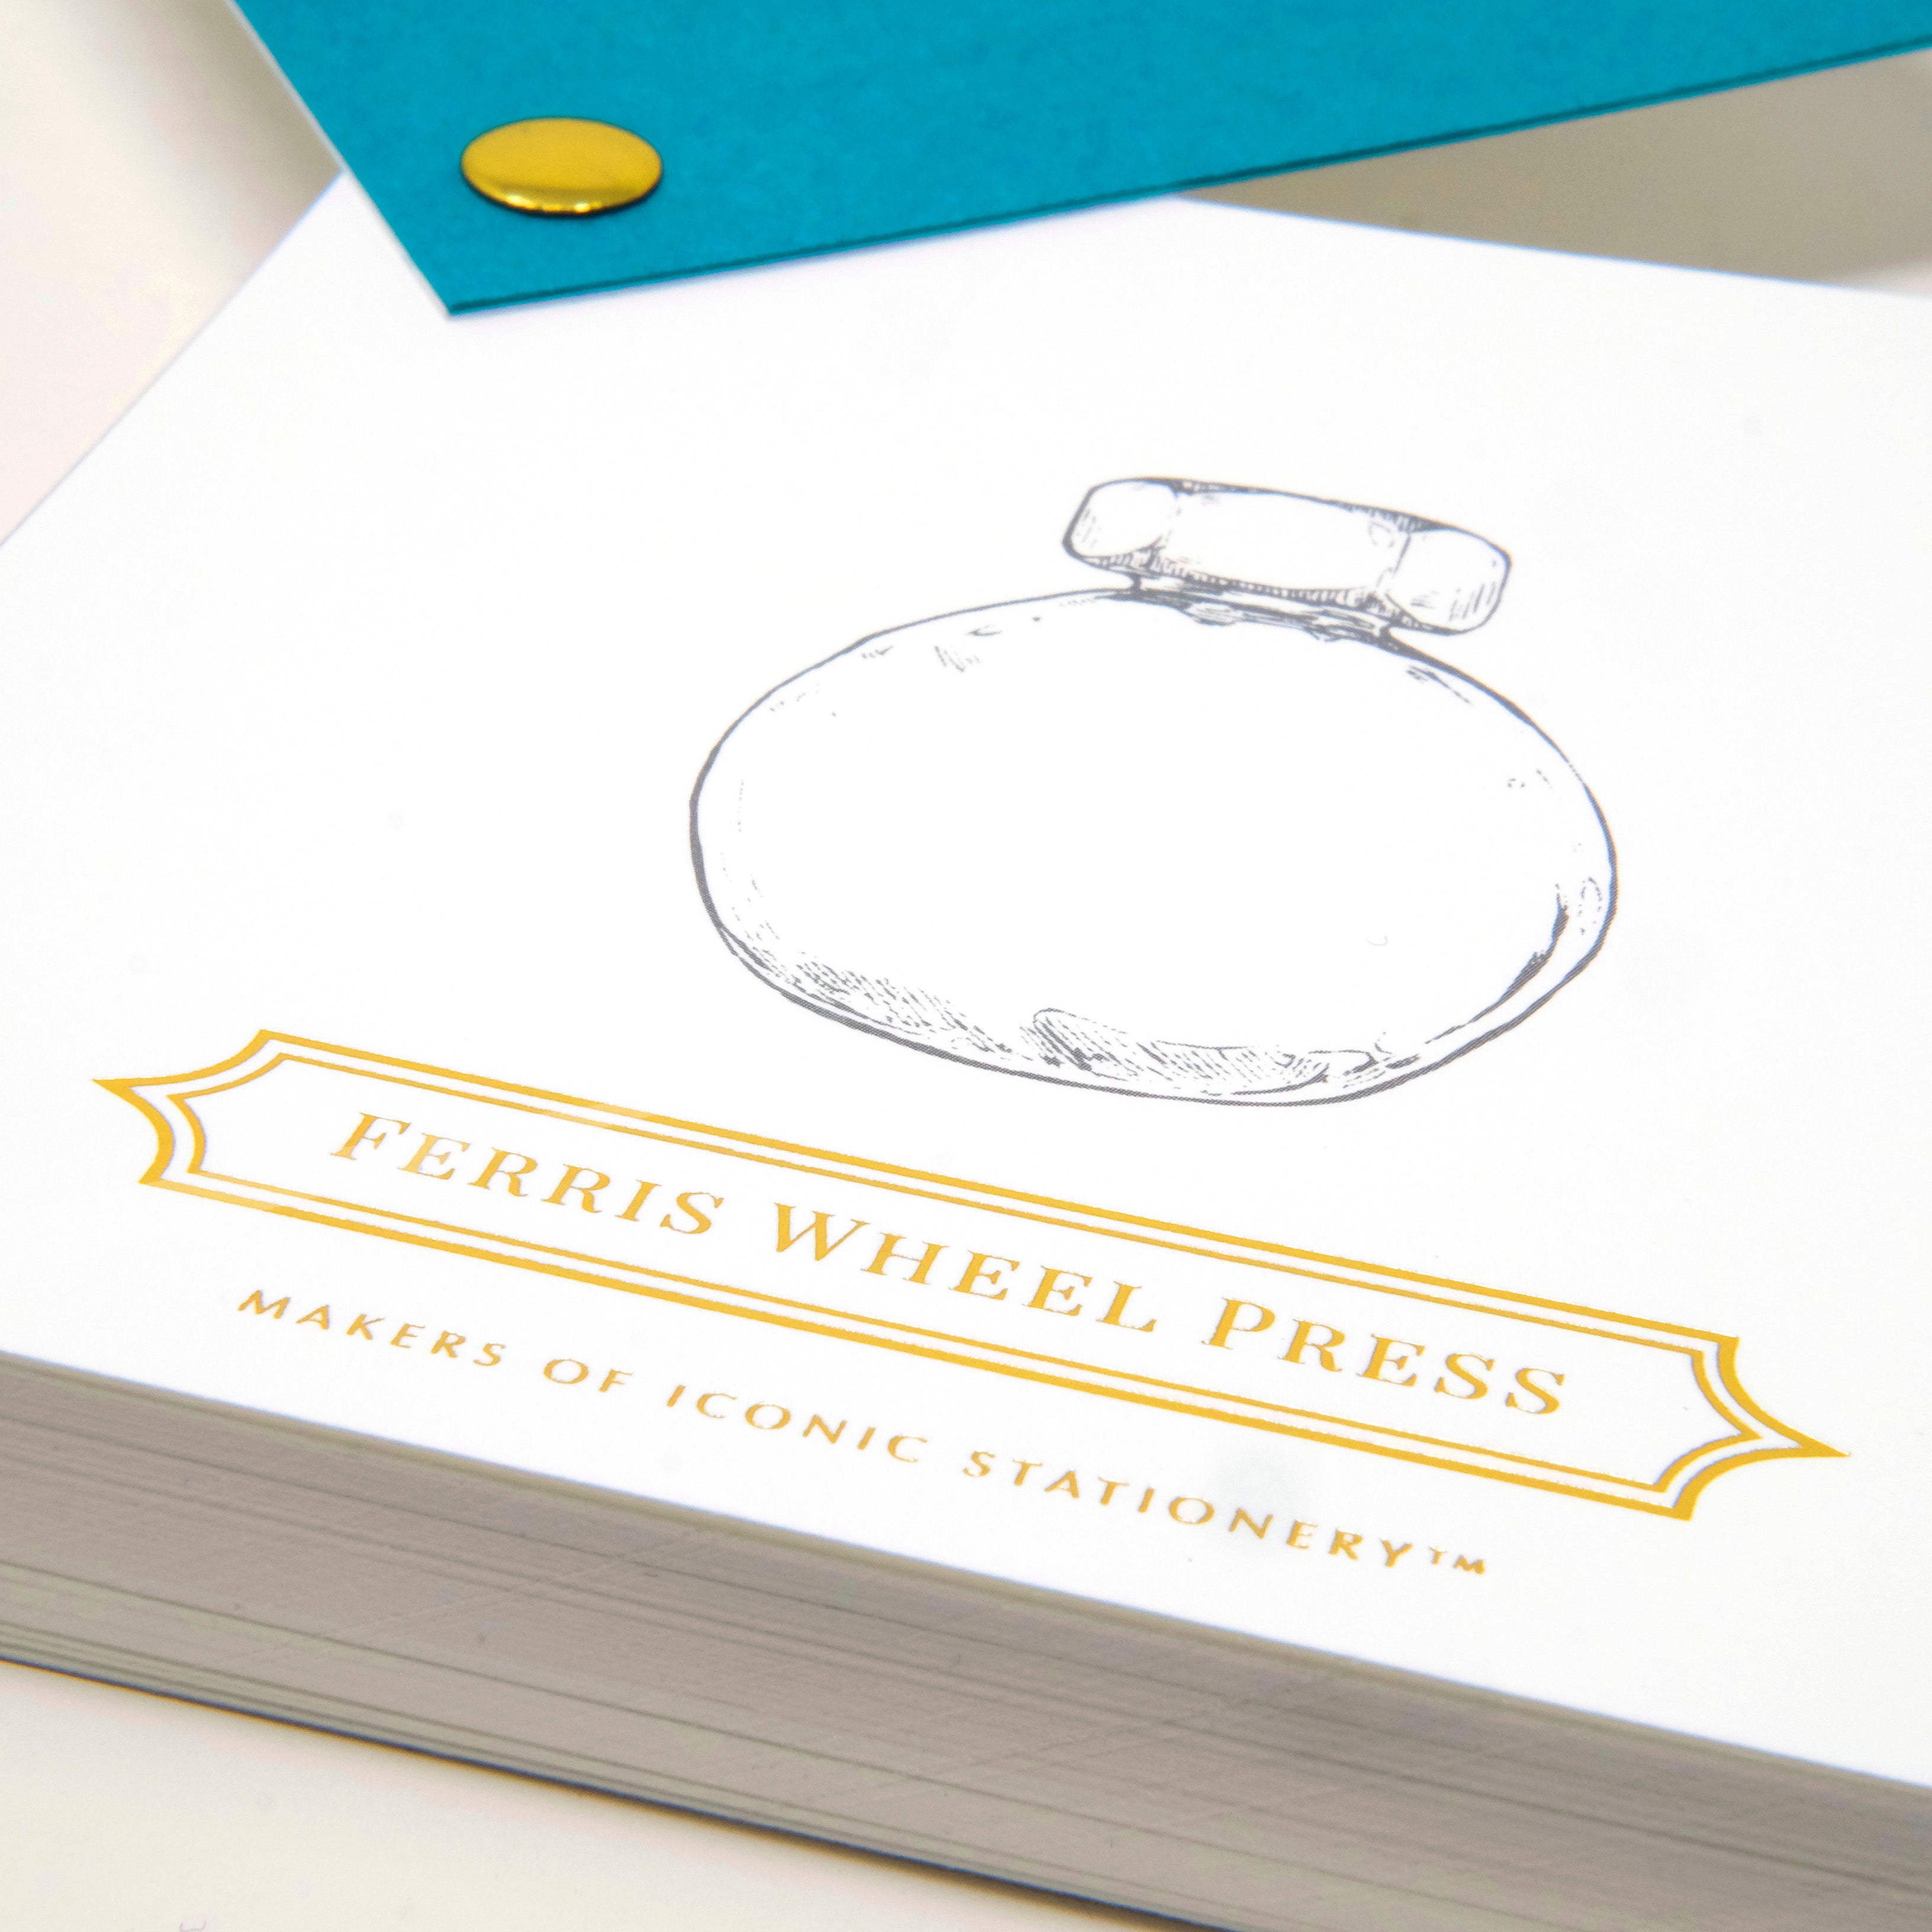 More Ink Swatches – Ferris Wheel Press – SusieG Studio